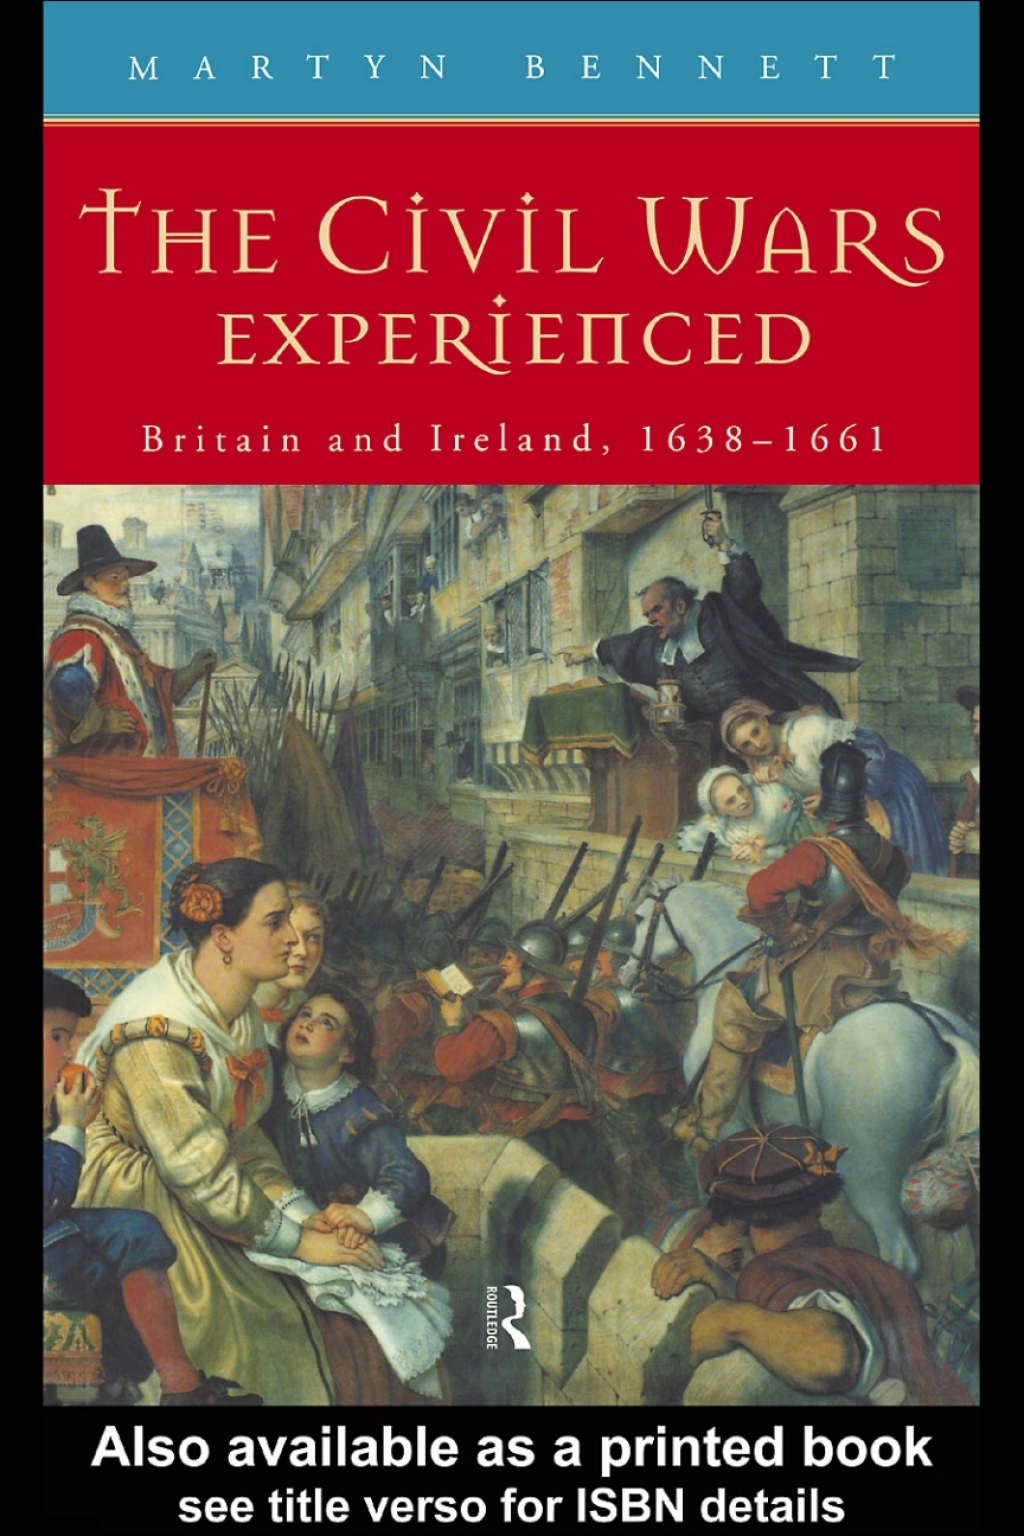 The Civil Wars Experienced (eBook) - Martyn Bennett